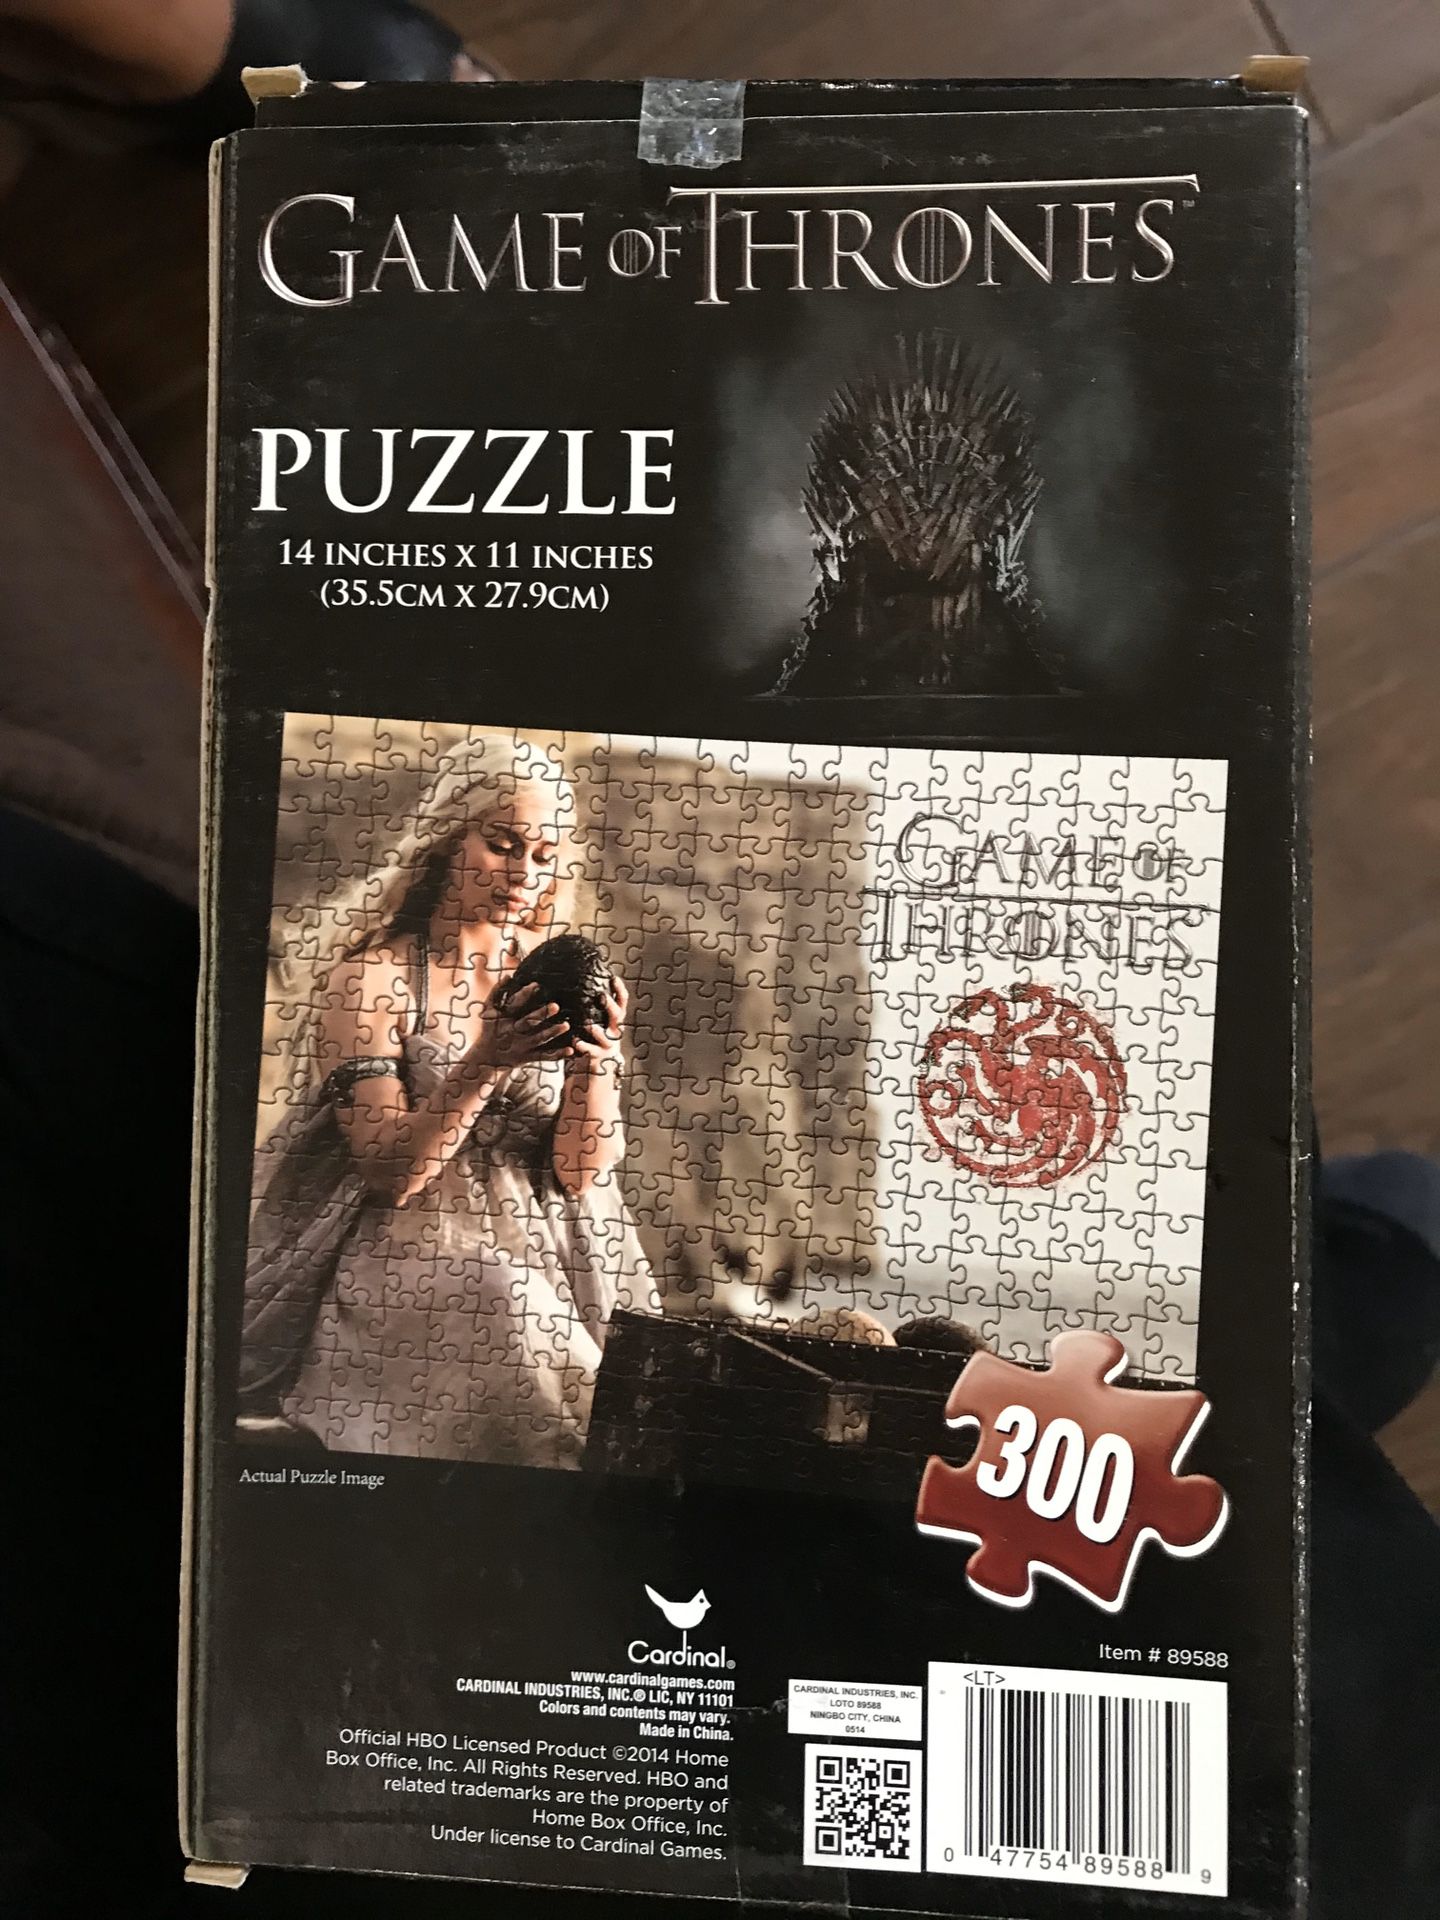 Game of Thrones 300 piece puzzle